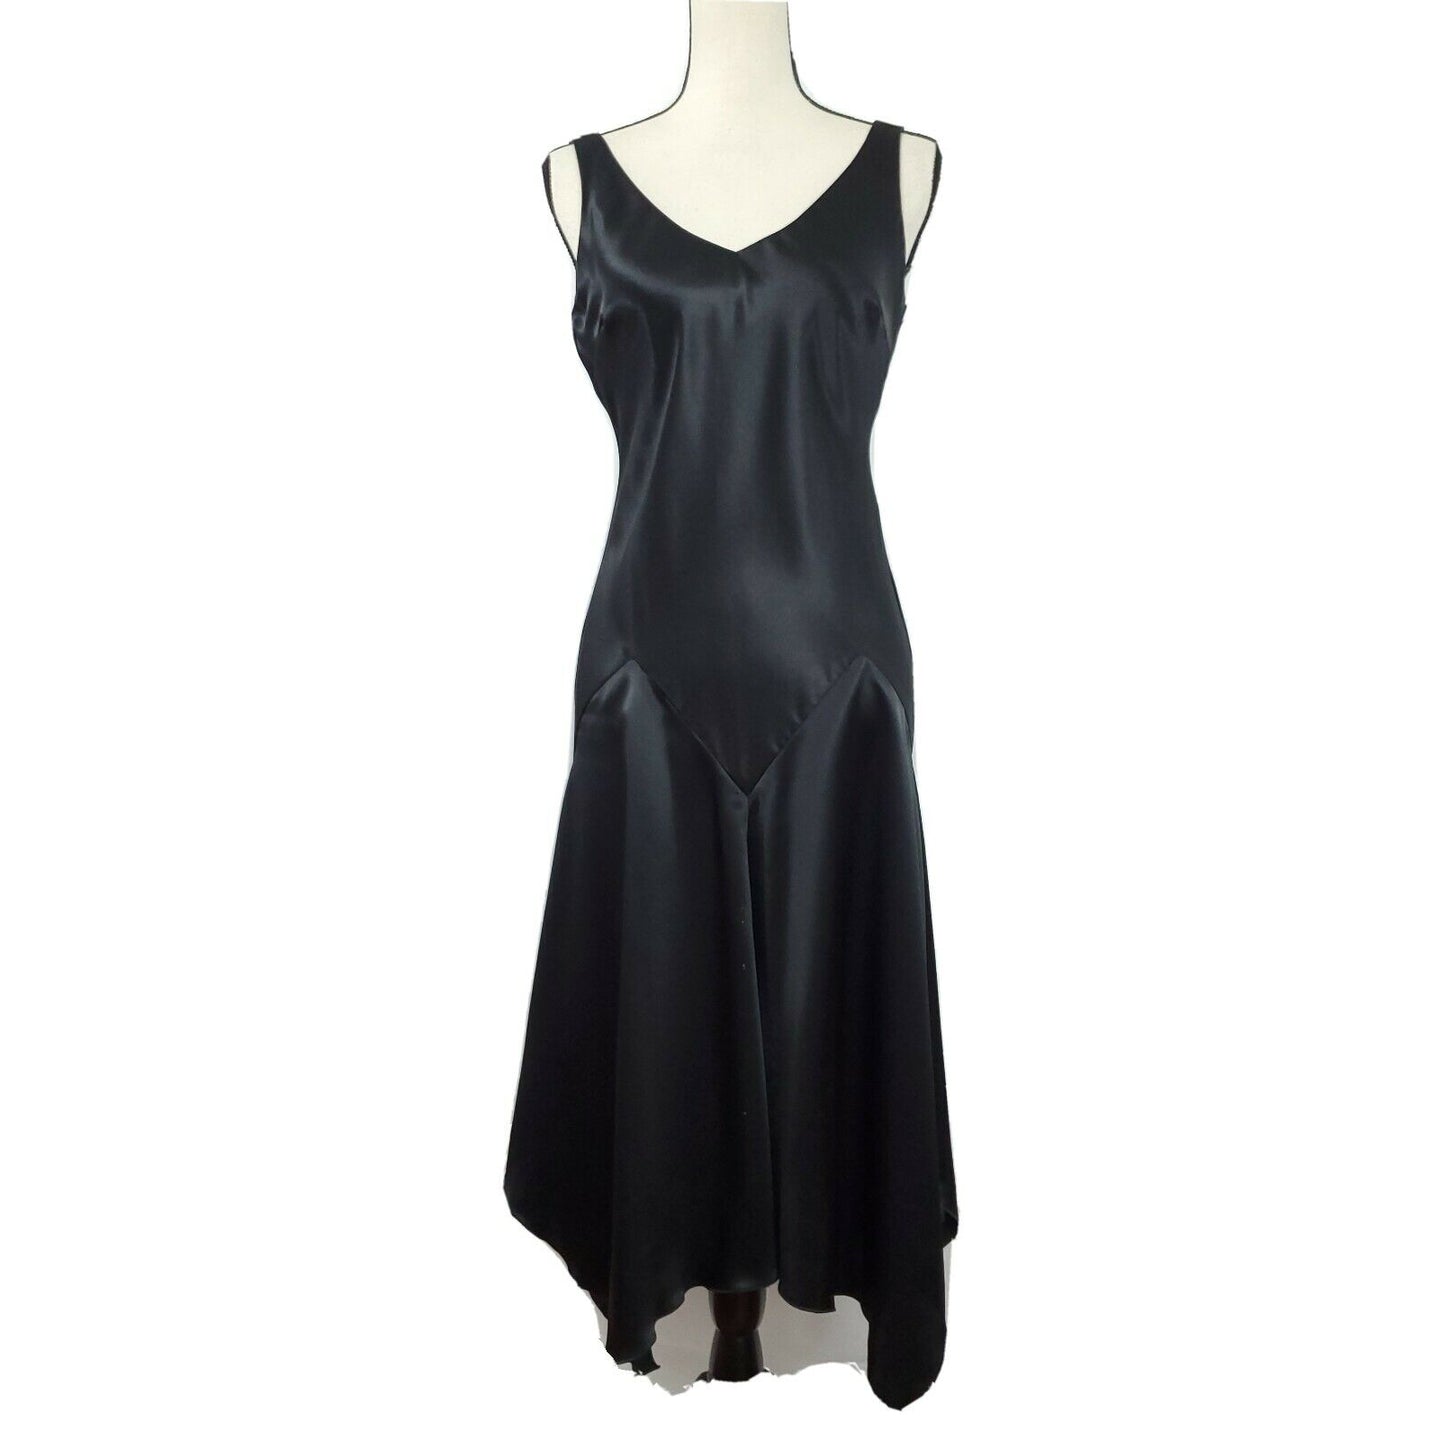 y2k Black Satin Dress Size 6P